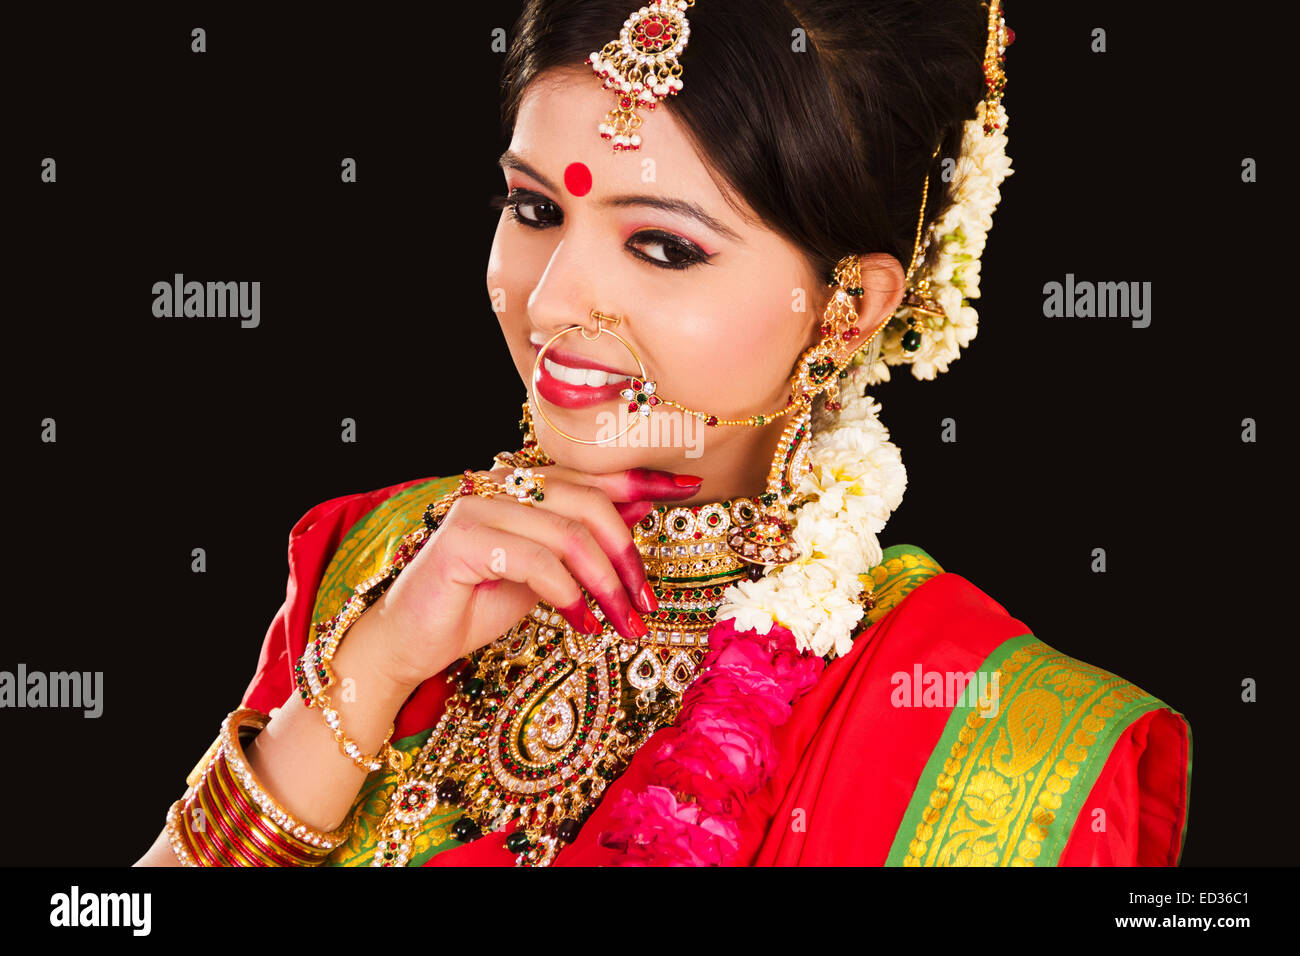 Telugu Wedding High Resolution Stock Photography And Images Alamy How do you take good wedding photos? https www alamy com stock photo 1 bengali bride lady wedding 76902897 html